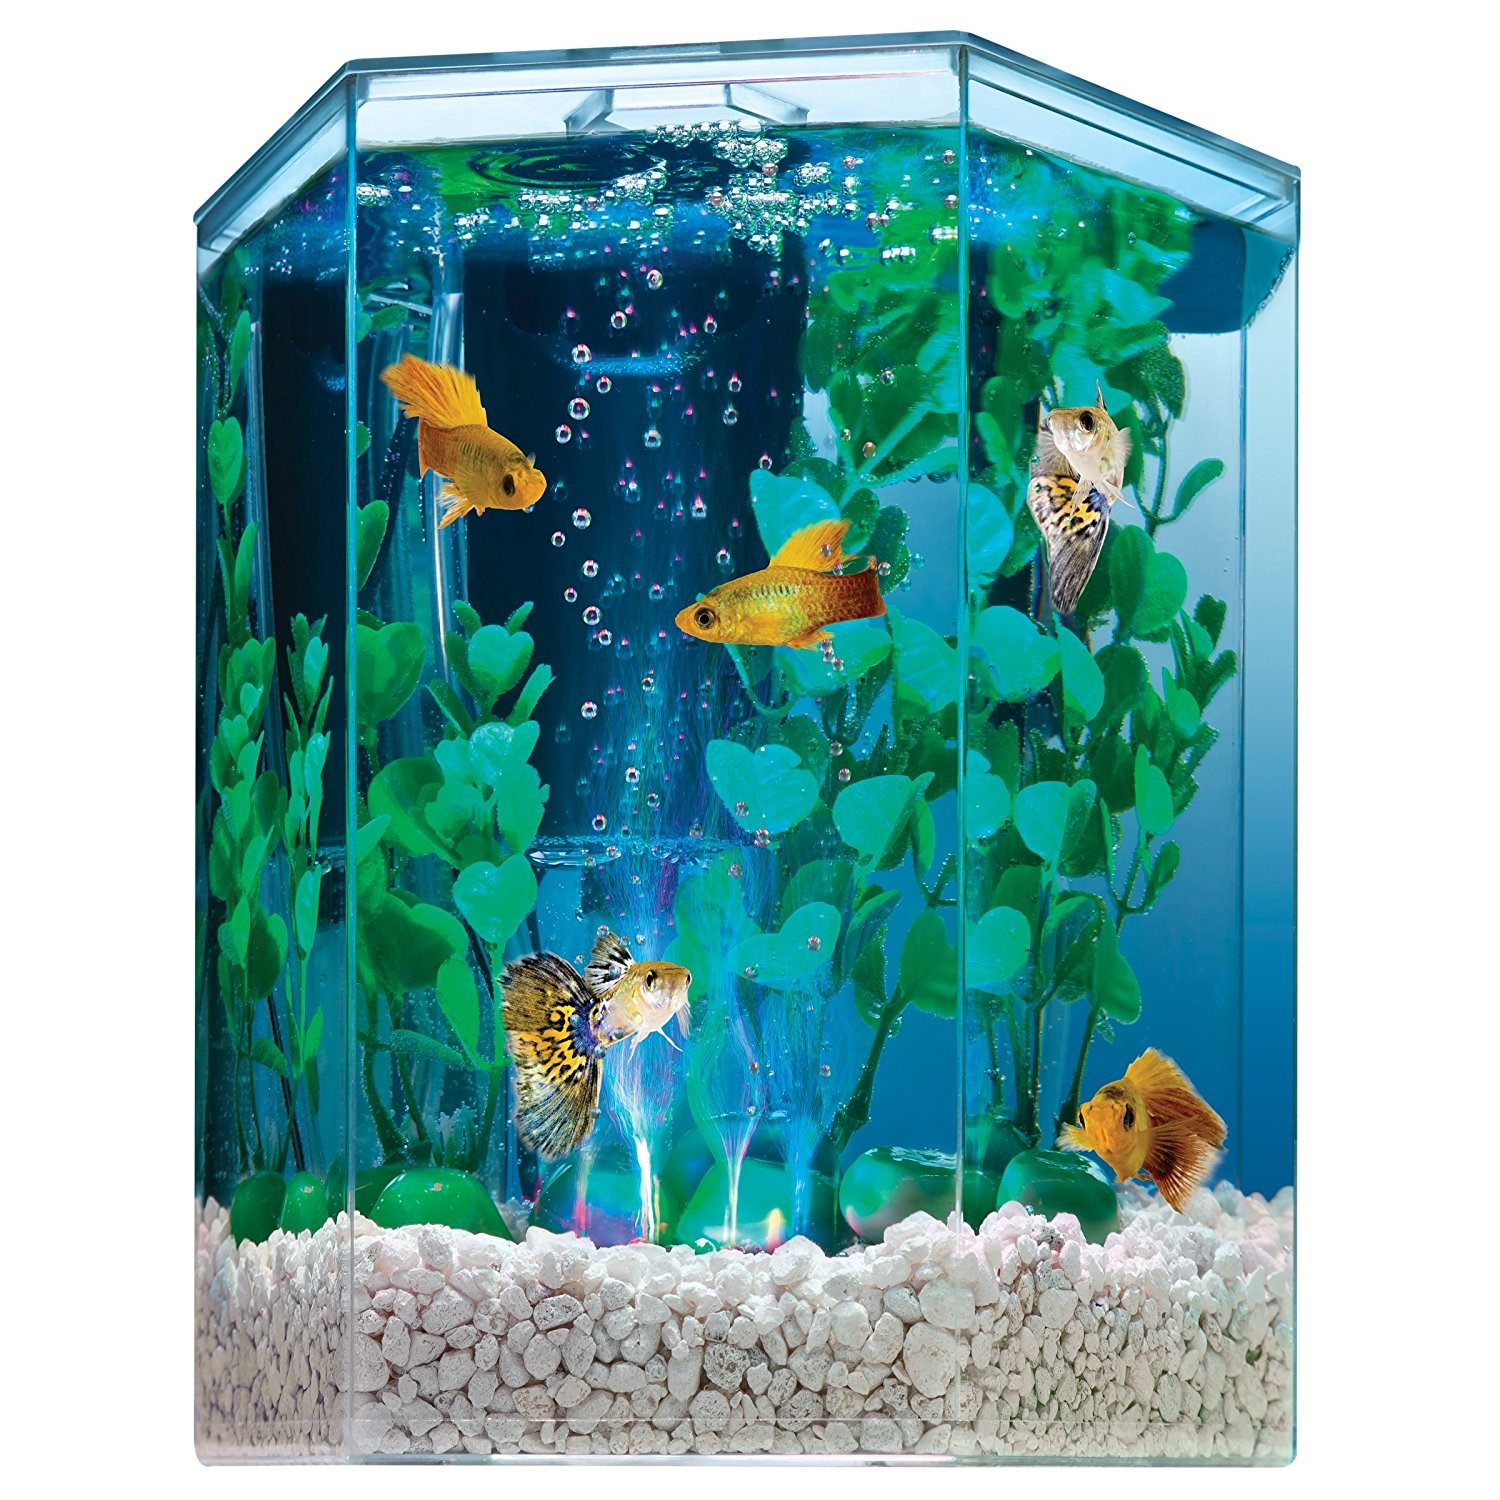 Tetra Bubbling LED Aquarium Kit 1 Gallon, Hexagon Shape, with Color-Changing Light Disc, Acrylic - image 2 of 5